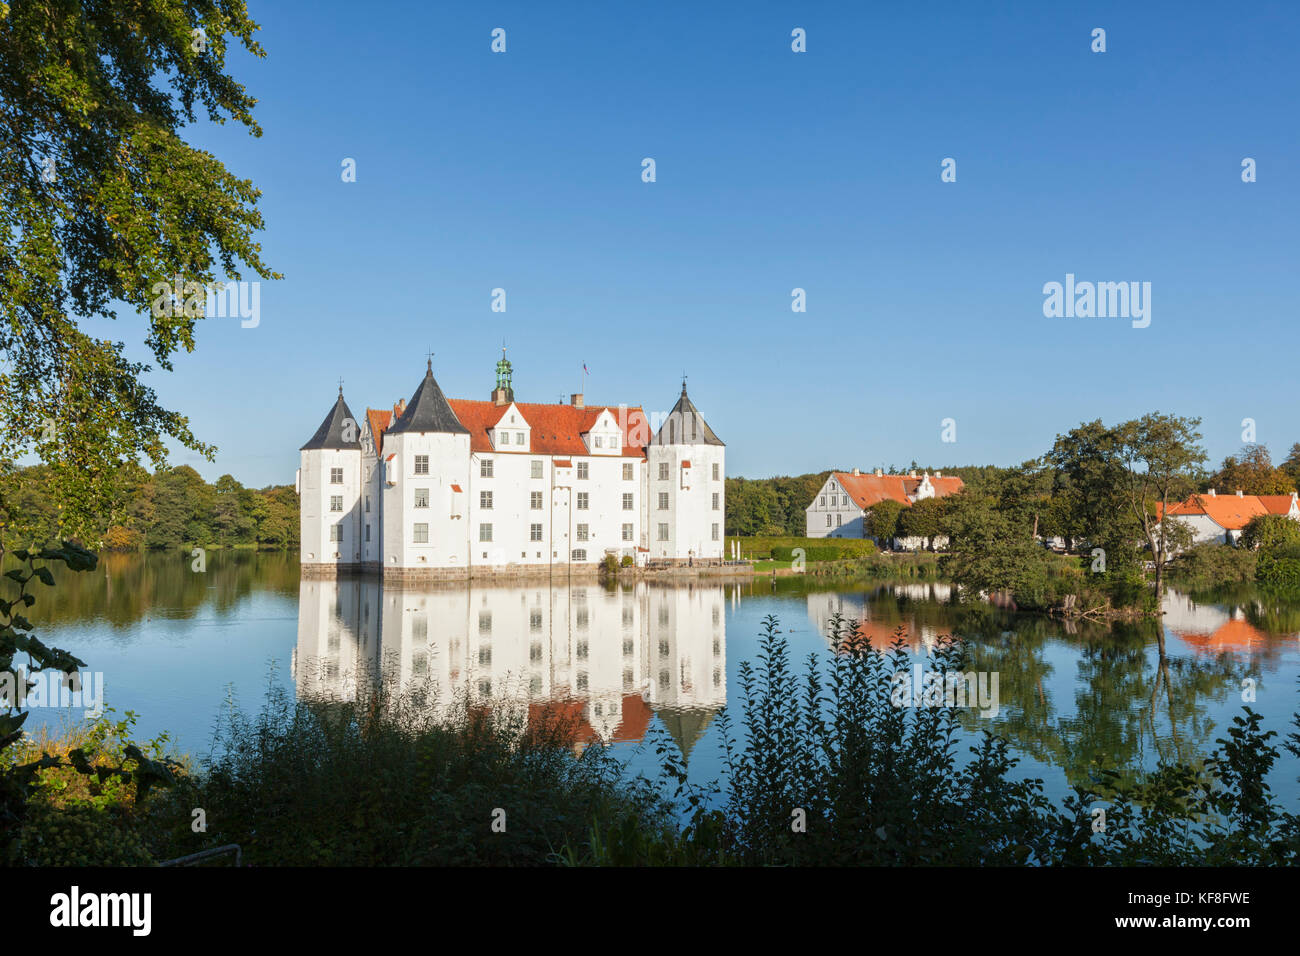 Water castle at Glücksburg, Germany Stock Photo